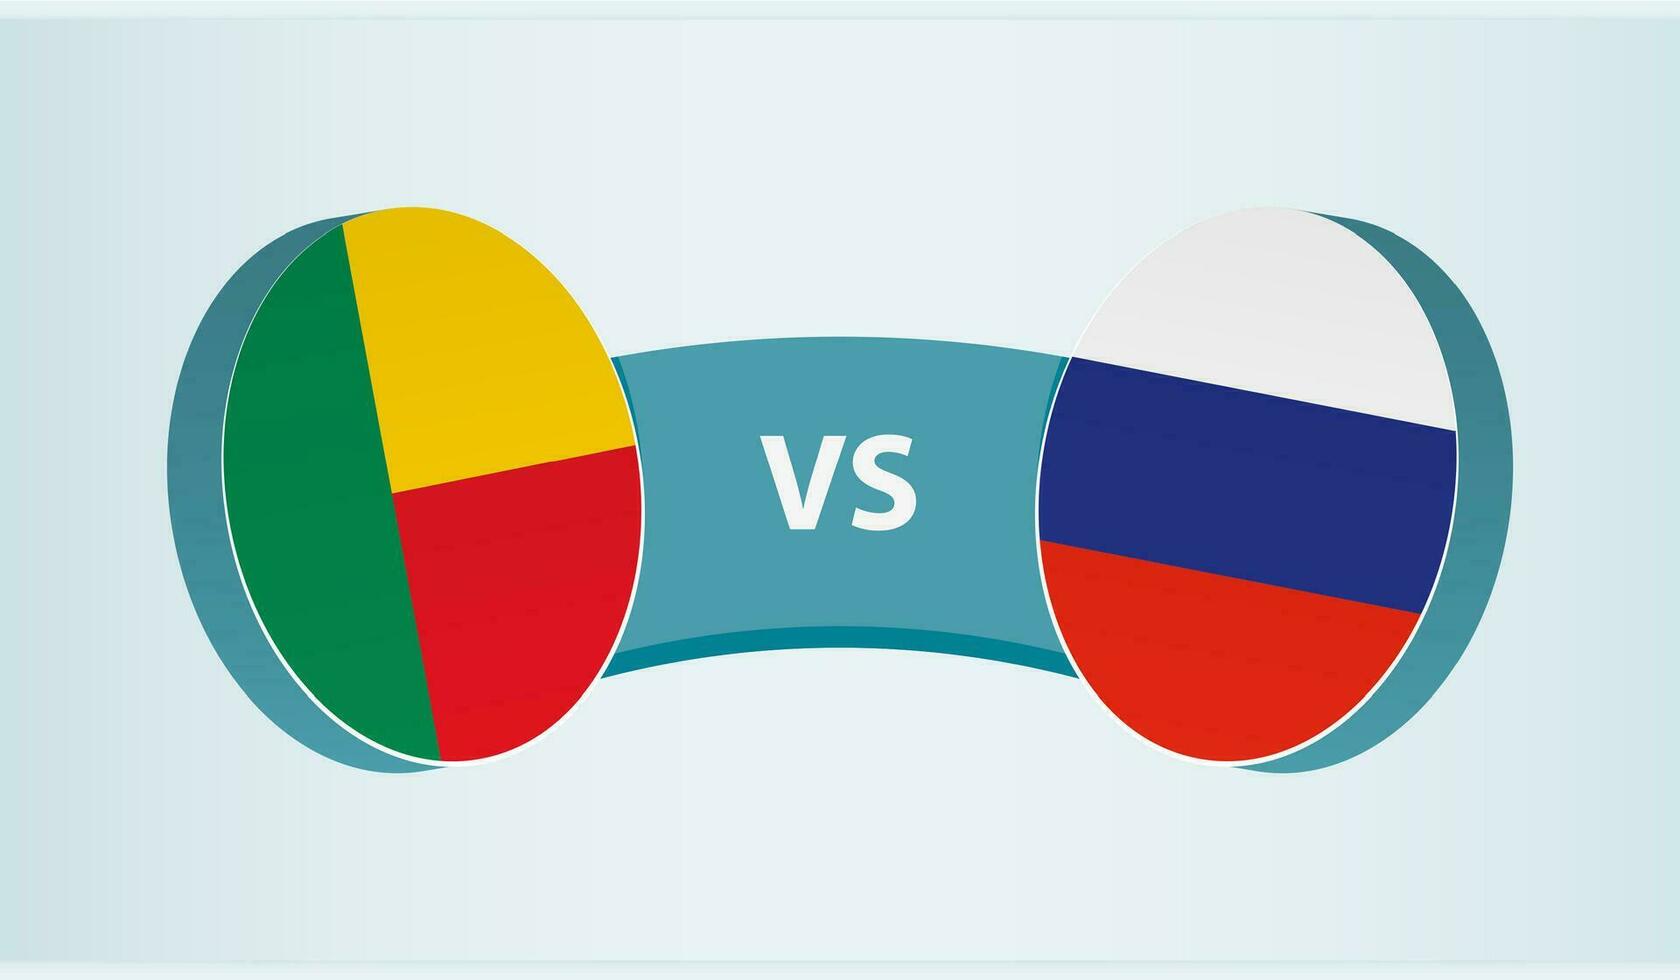 Benin versus Russia, team sports competition concept. vector